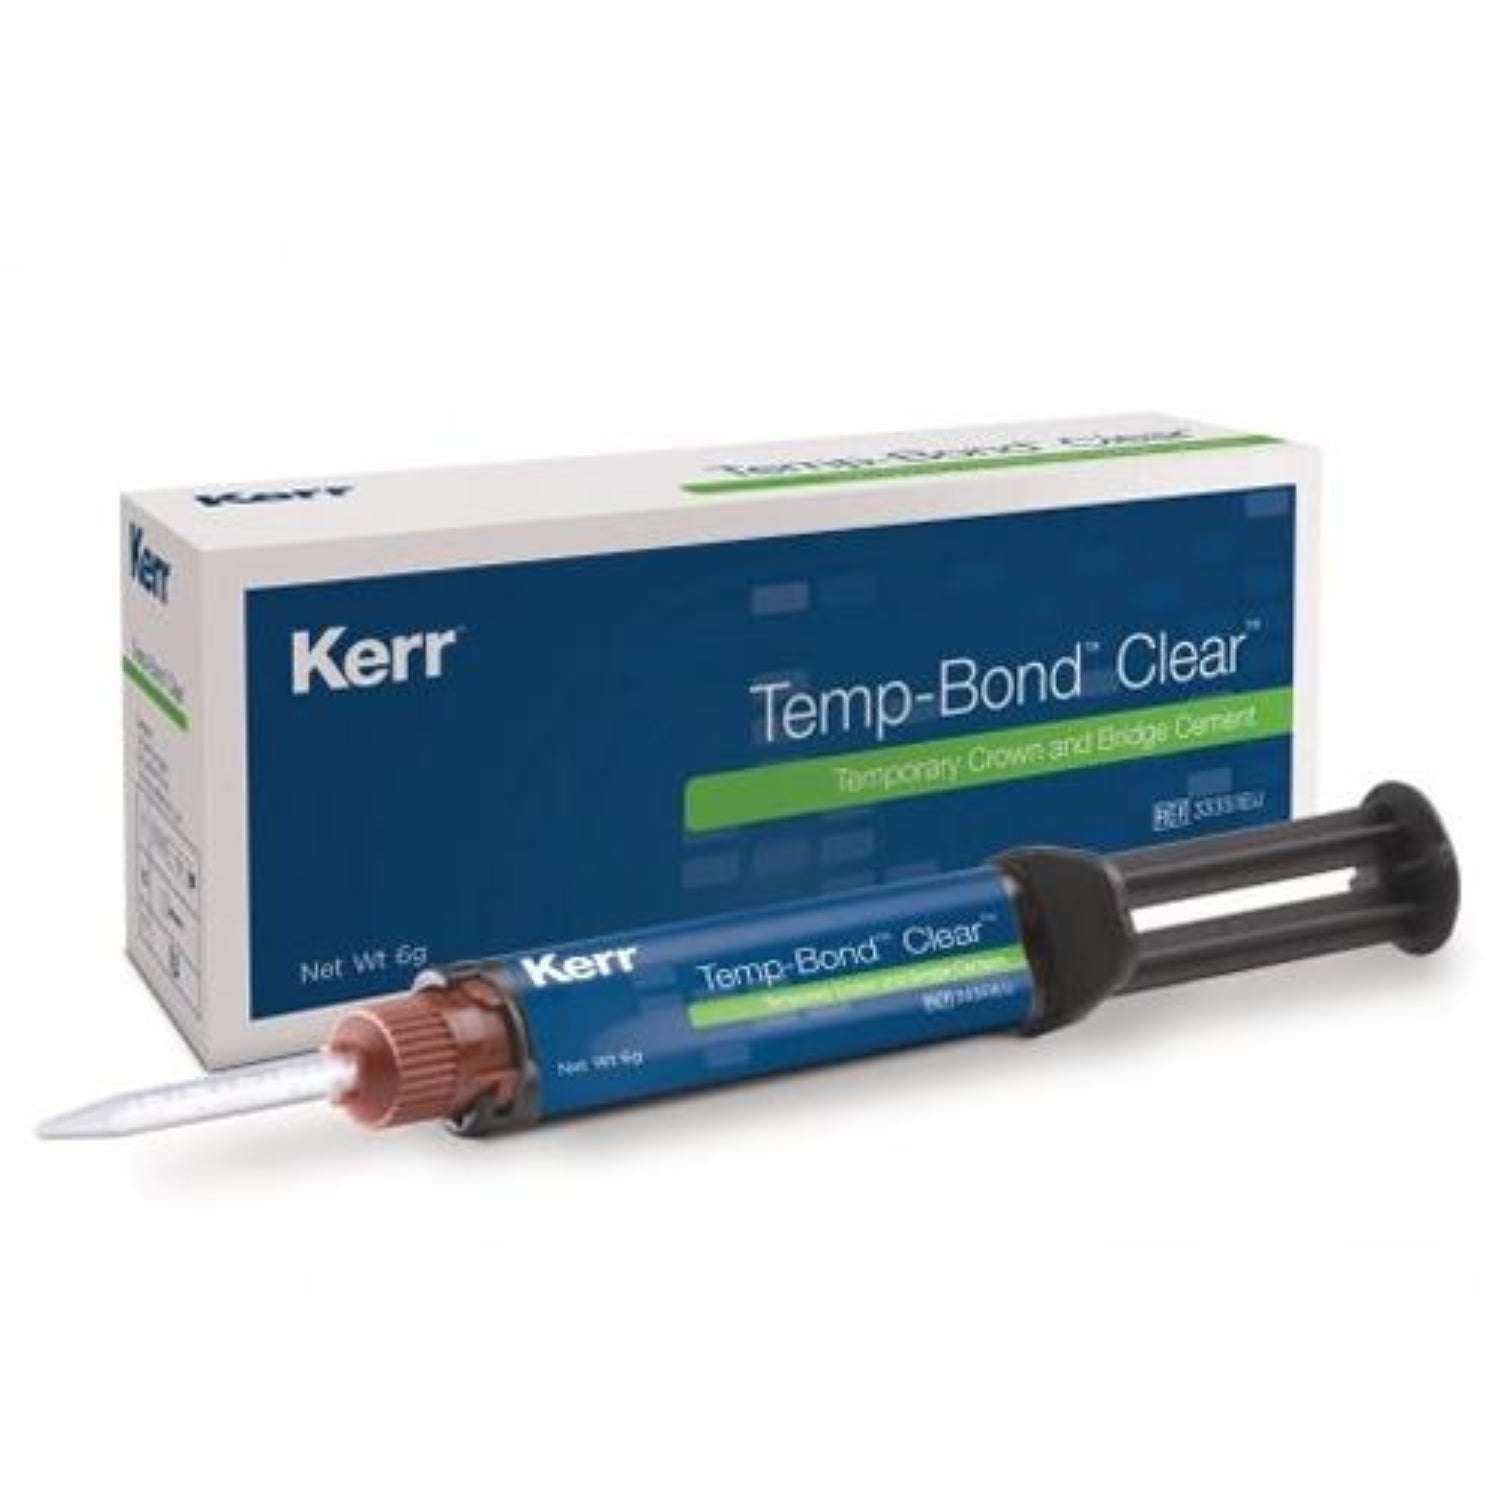 kerr-tempbond-clear-temporary-dental-cement-6g-syringe